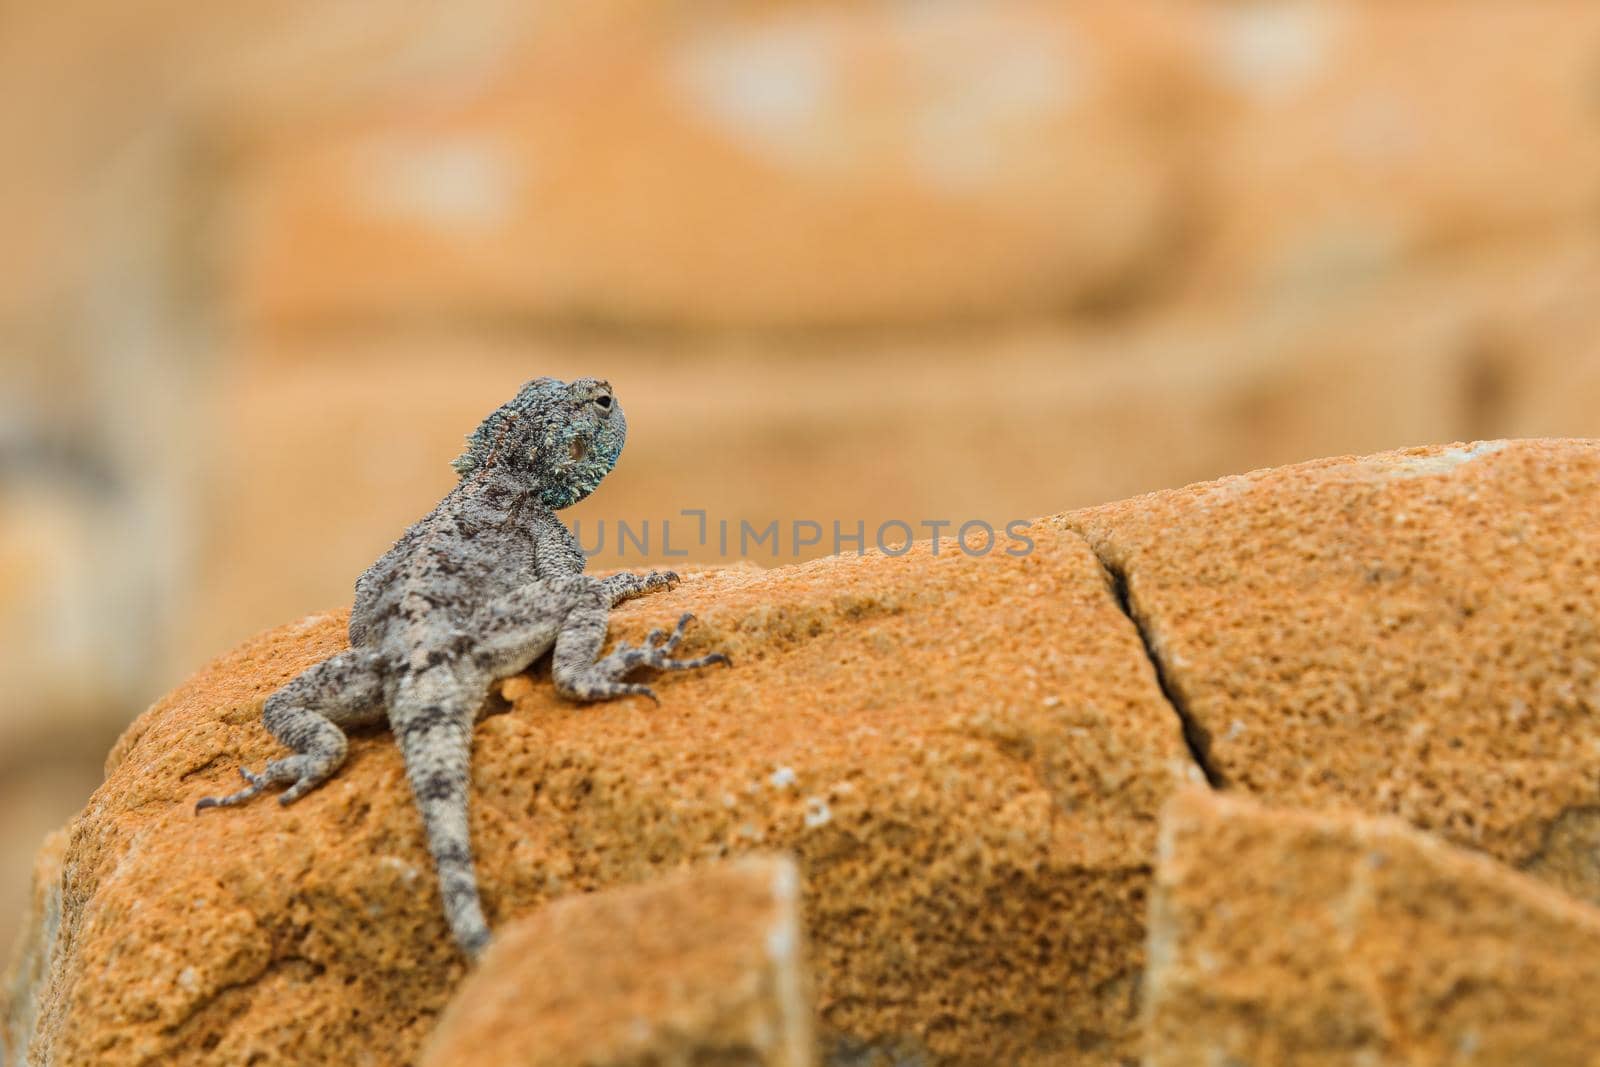 Southern rock agama lizard (Agama atra) on a sandstone boulder, Gouritsmond, South Africa